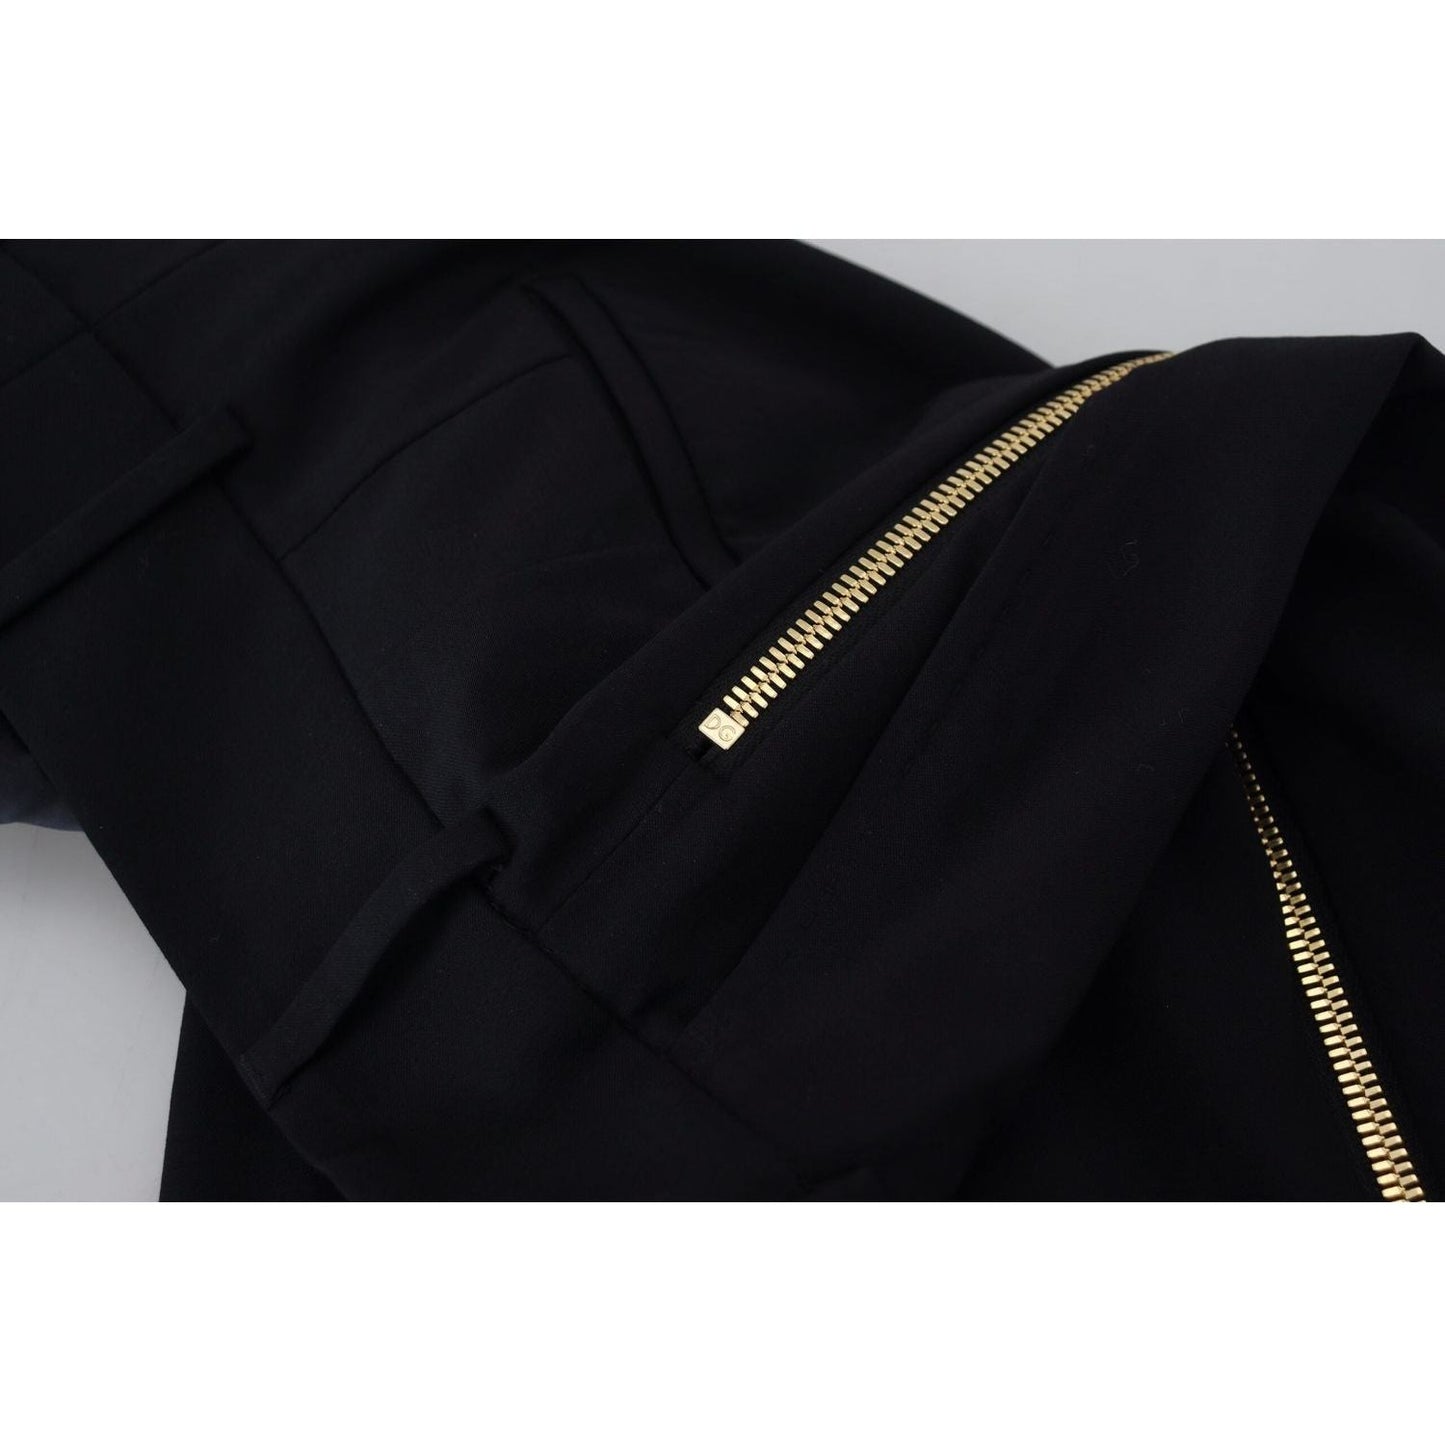 Dolce & Gabbana Elegant High Waist Tapered Wool Pants black-wool-high-waist-tapered-pants